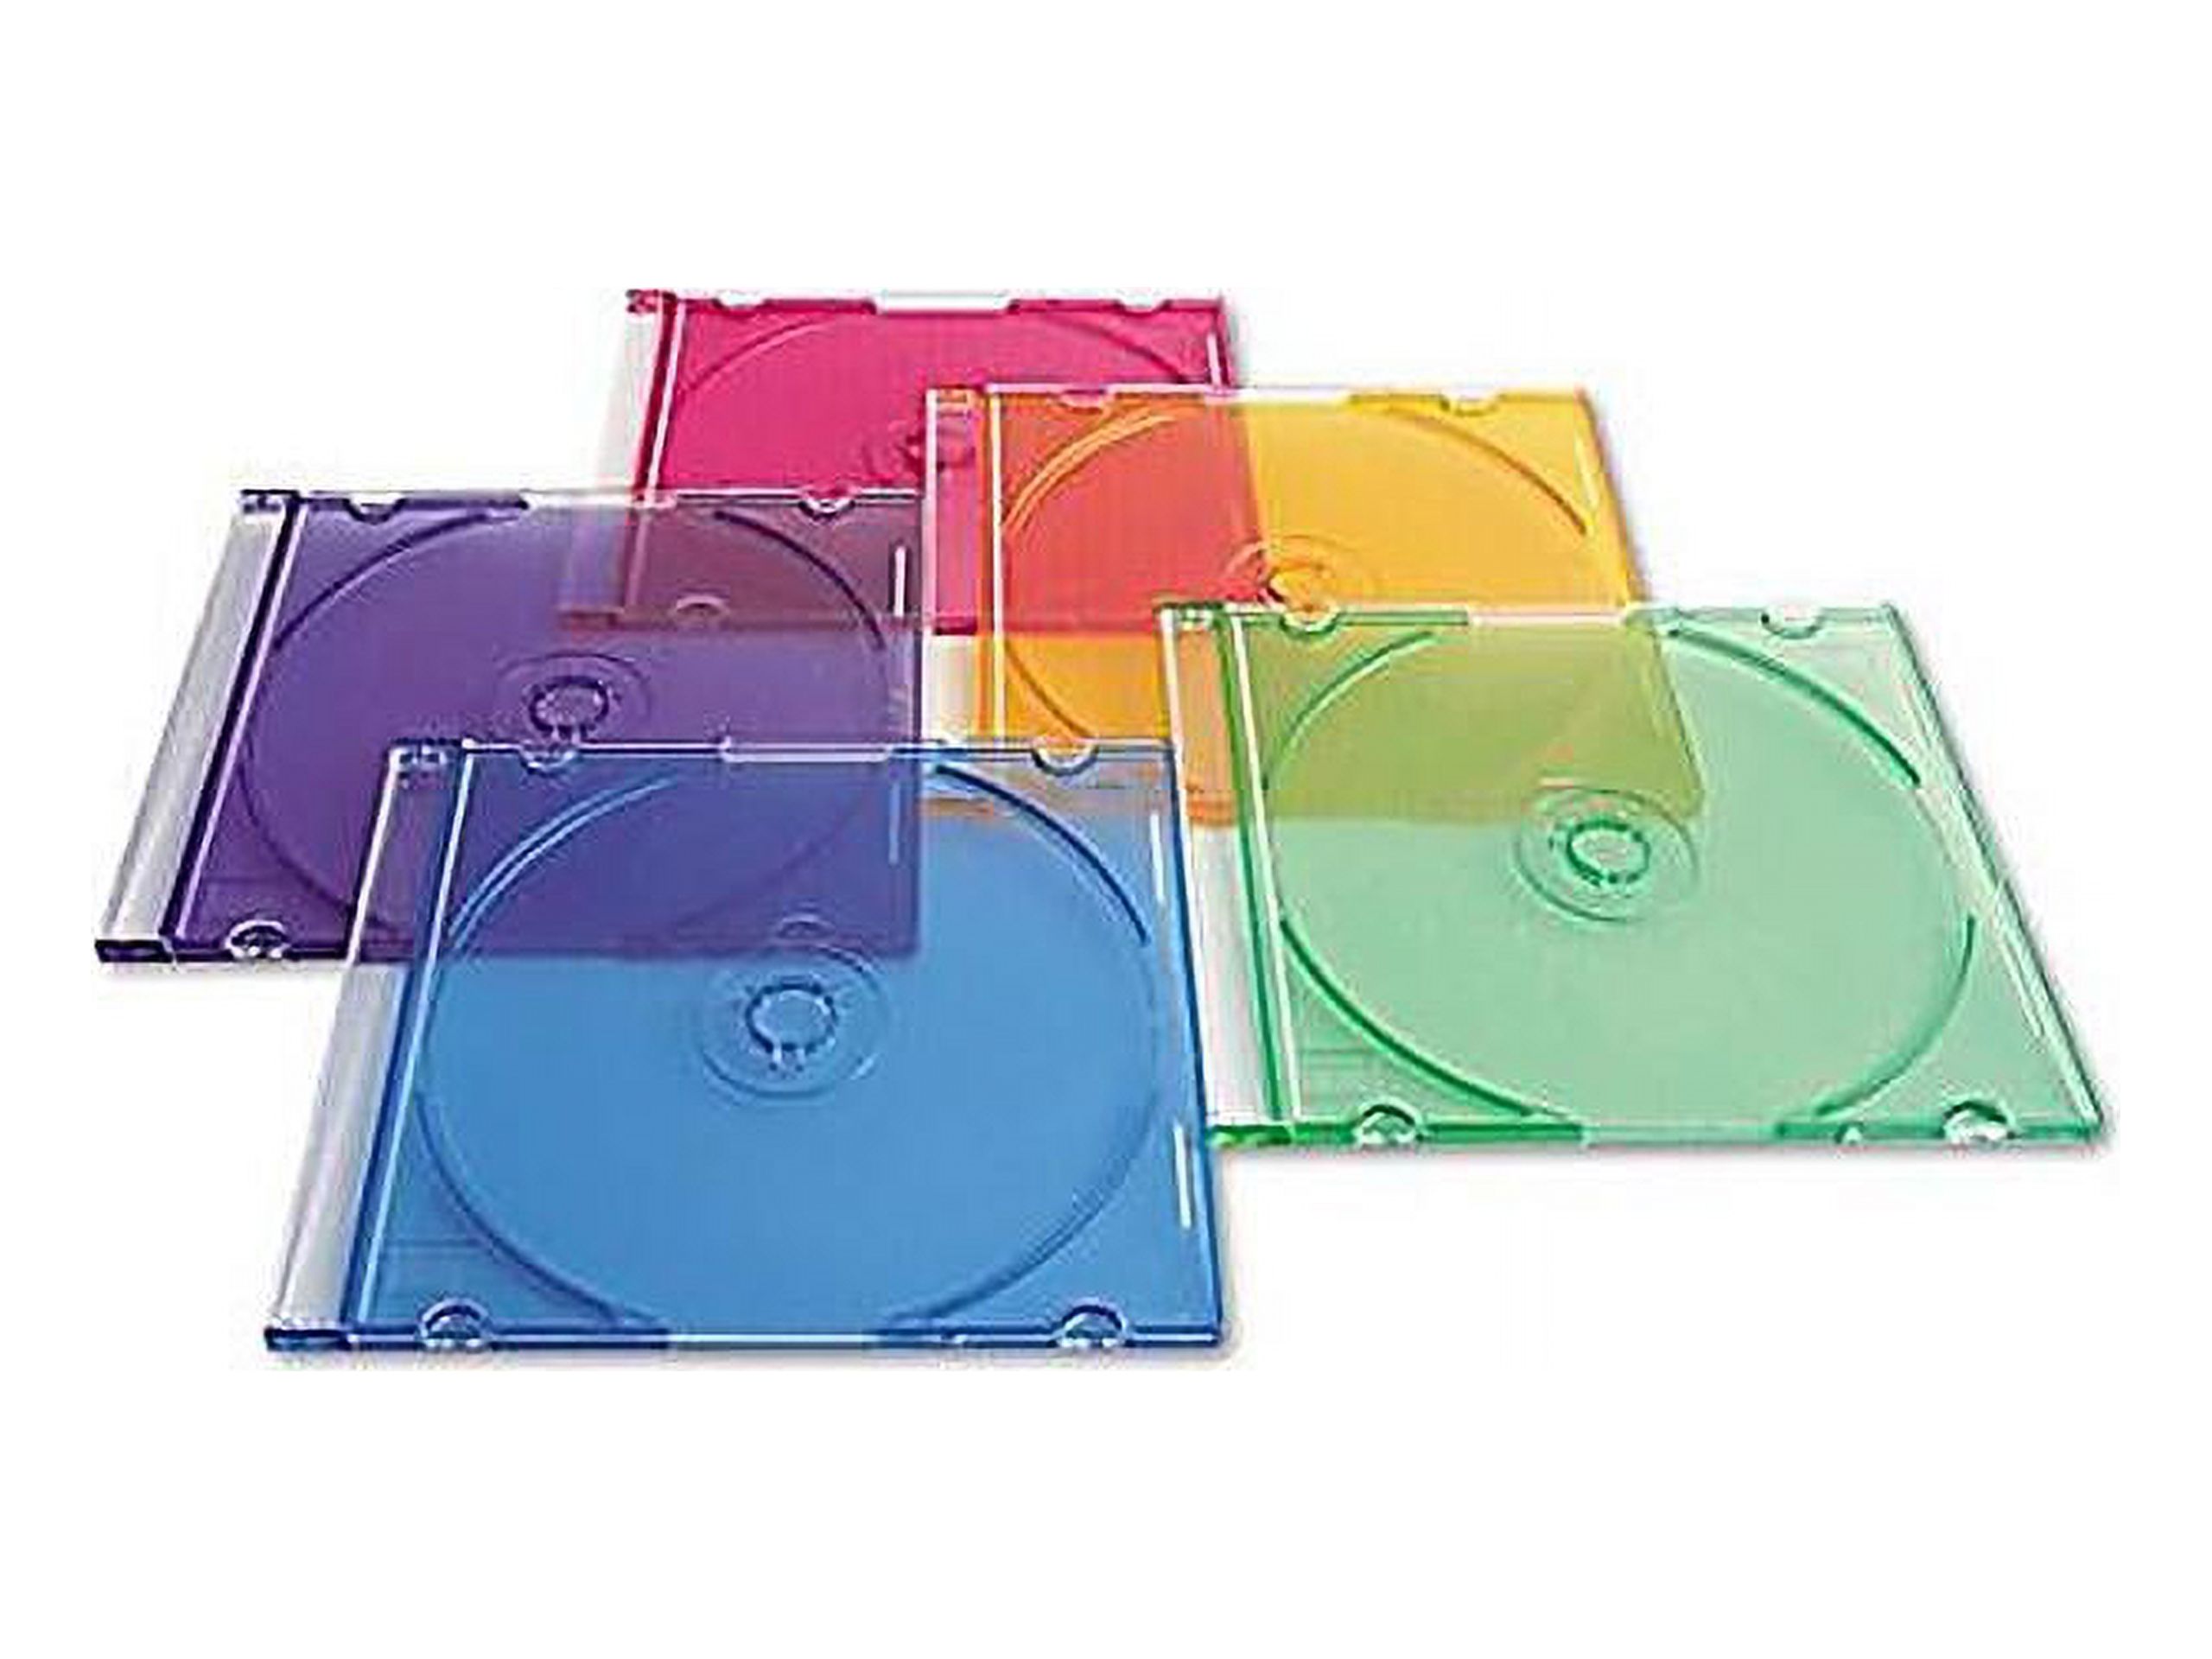 Verbatim 94178 CD/ DVD Color Slim Cases 50pk - image 1 of 2